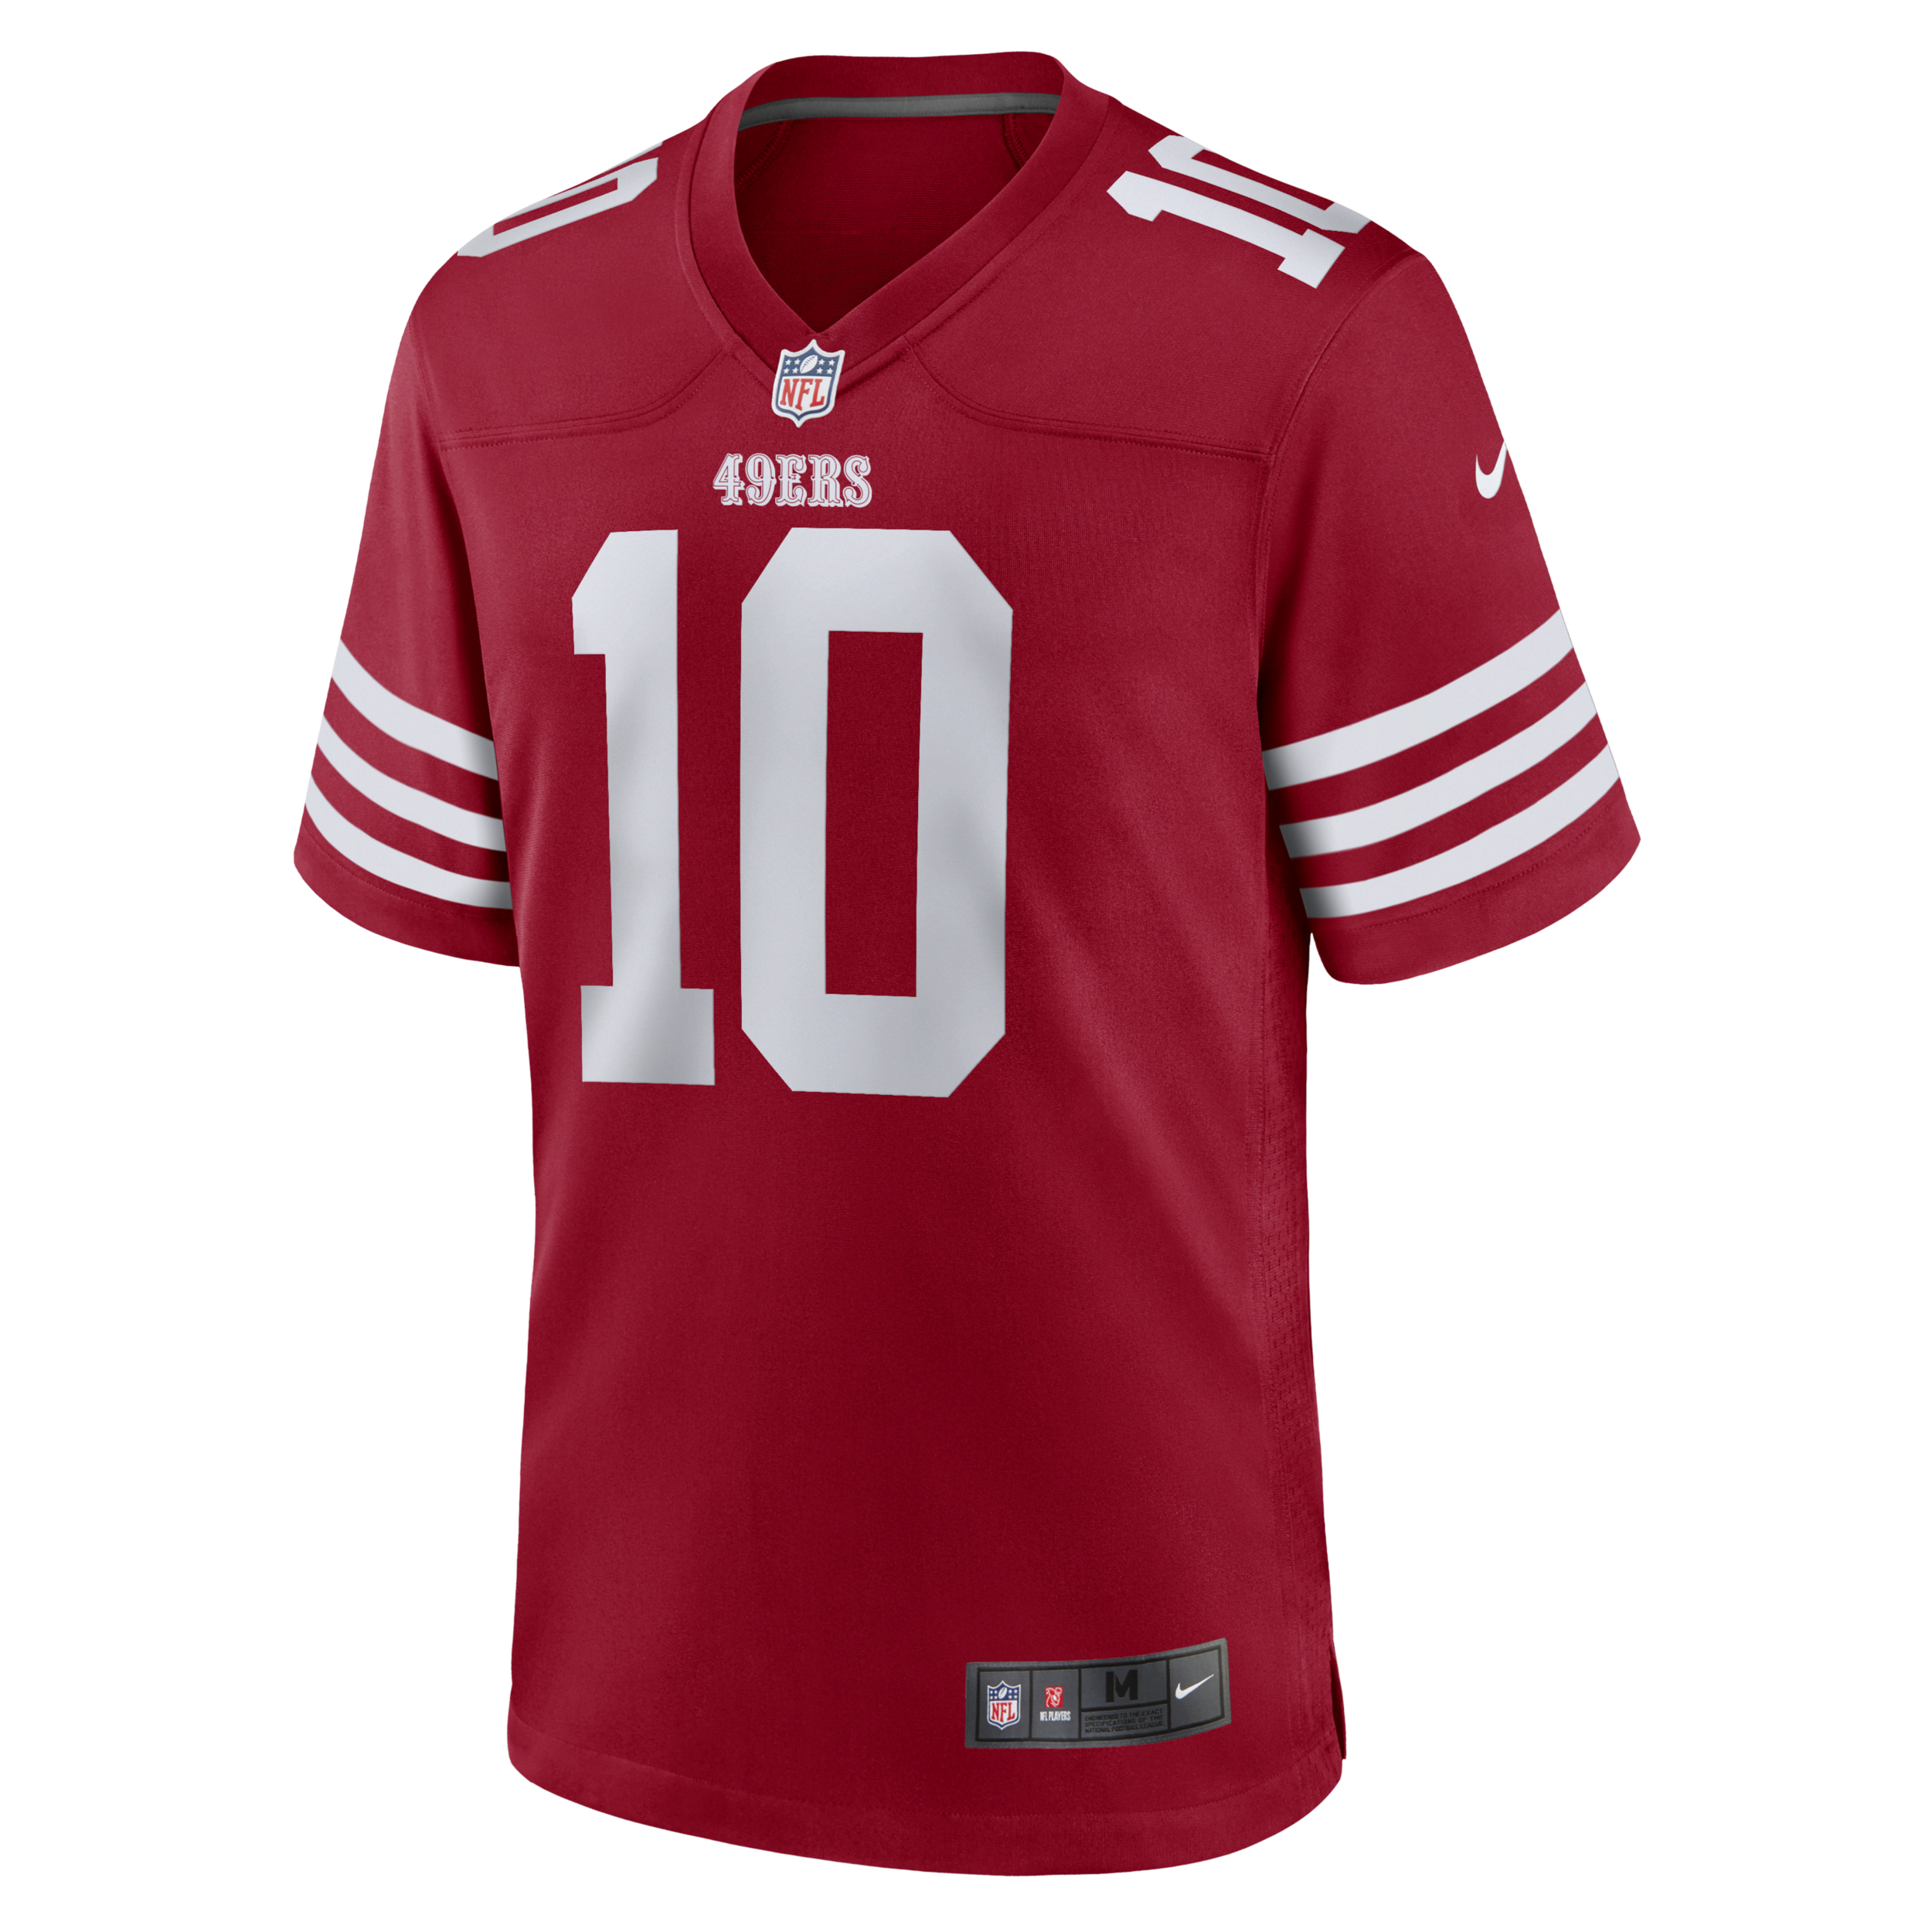 Nike NFL San Francisco 49ers (Jimmy Garoppolo) American-football-wedstrijdjersey voor heren - Rood